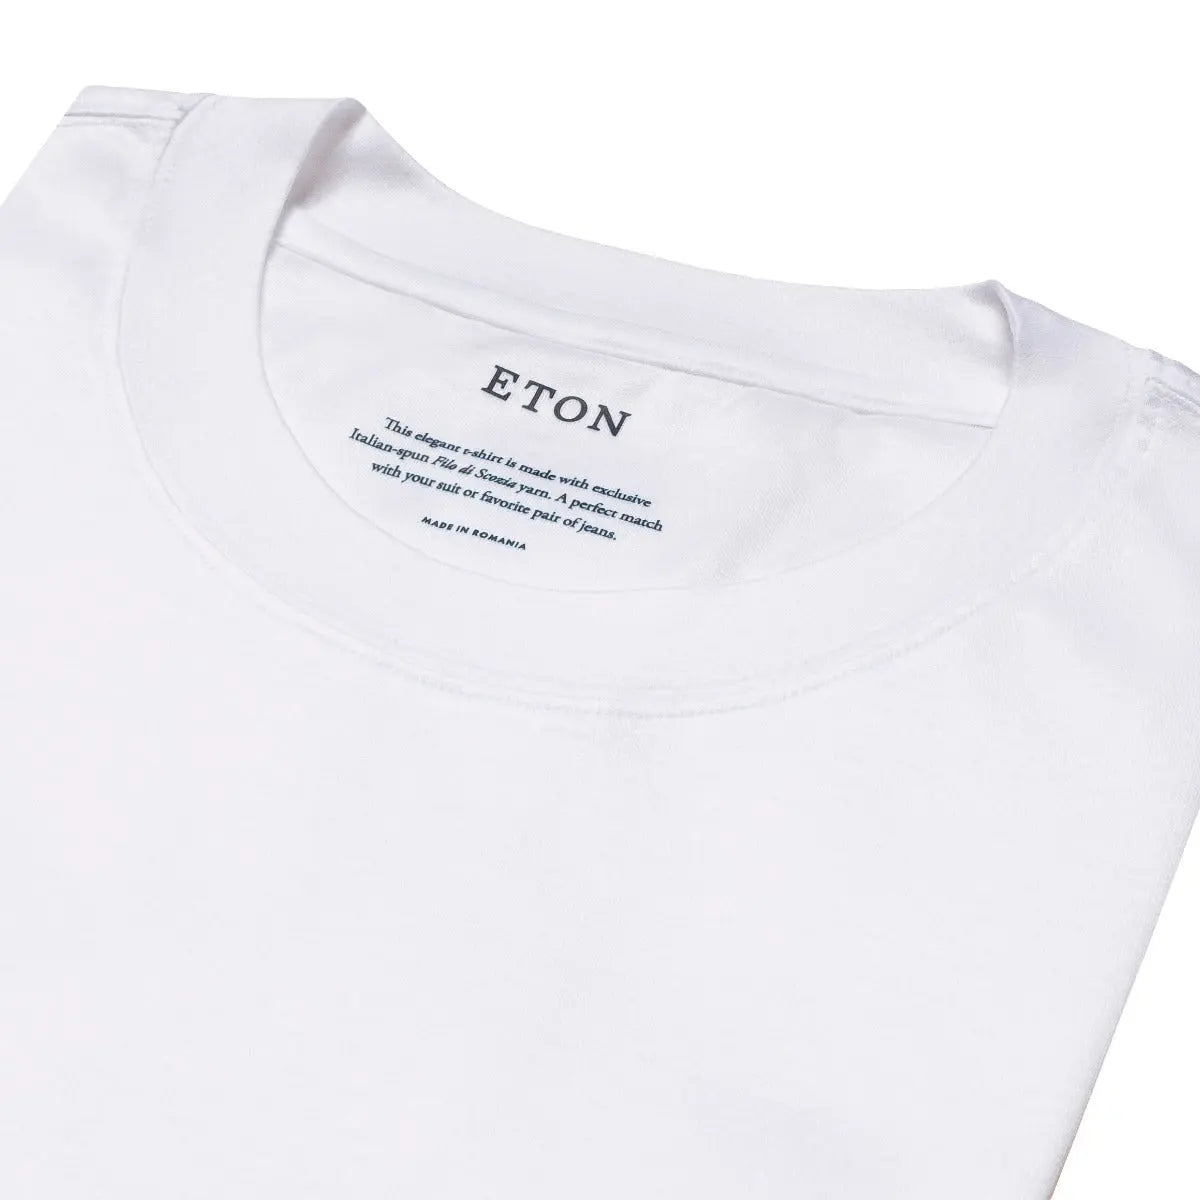 White Filo di Scozia T-shirt  Eton   